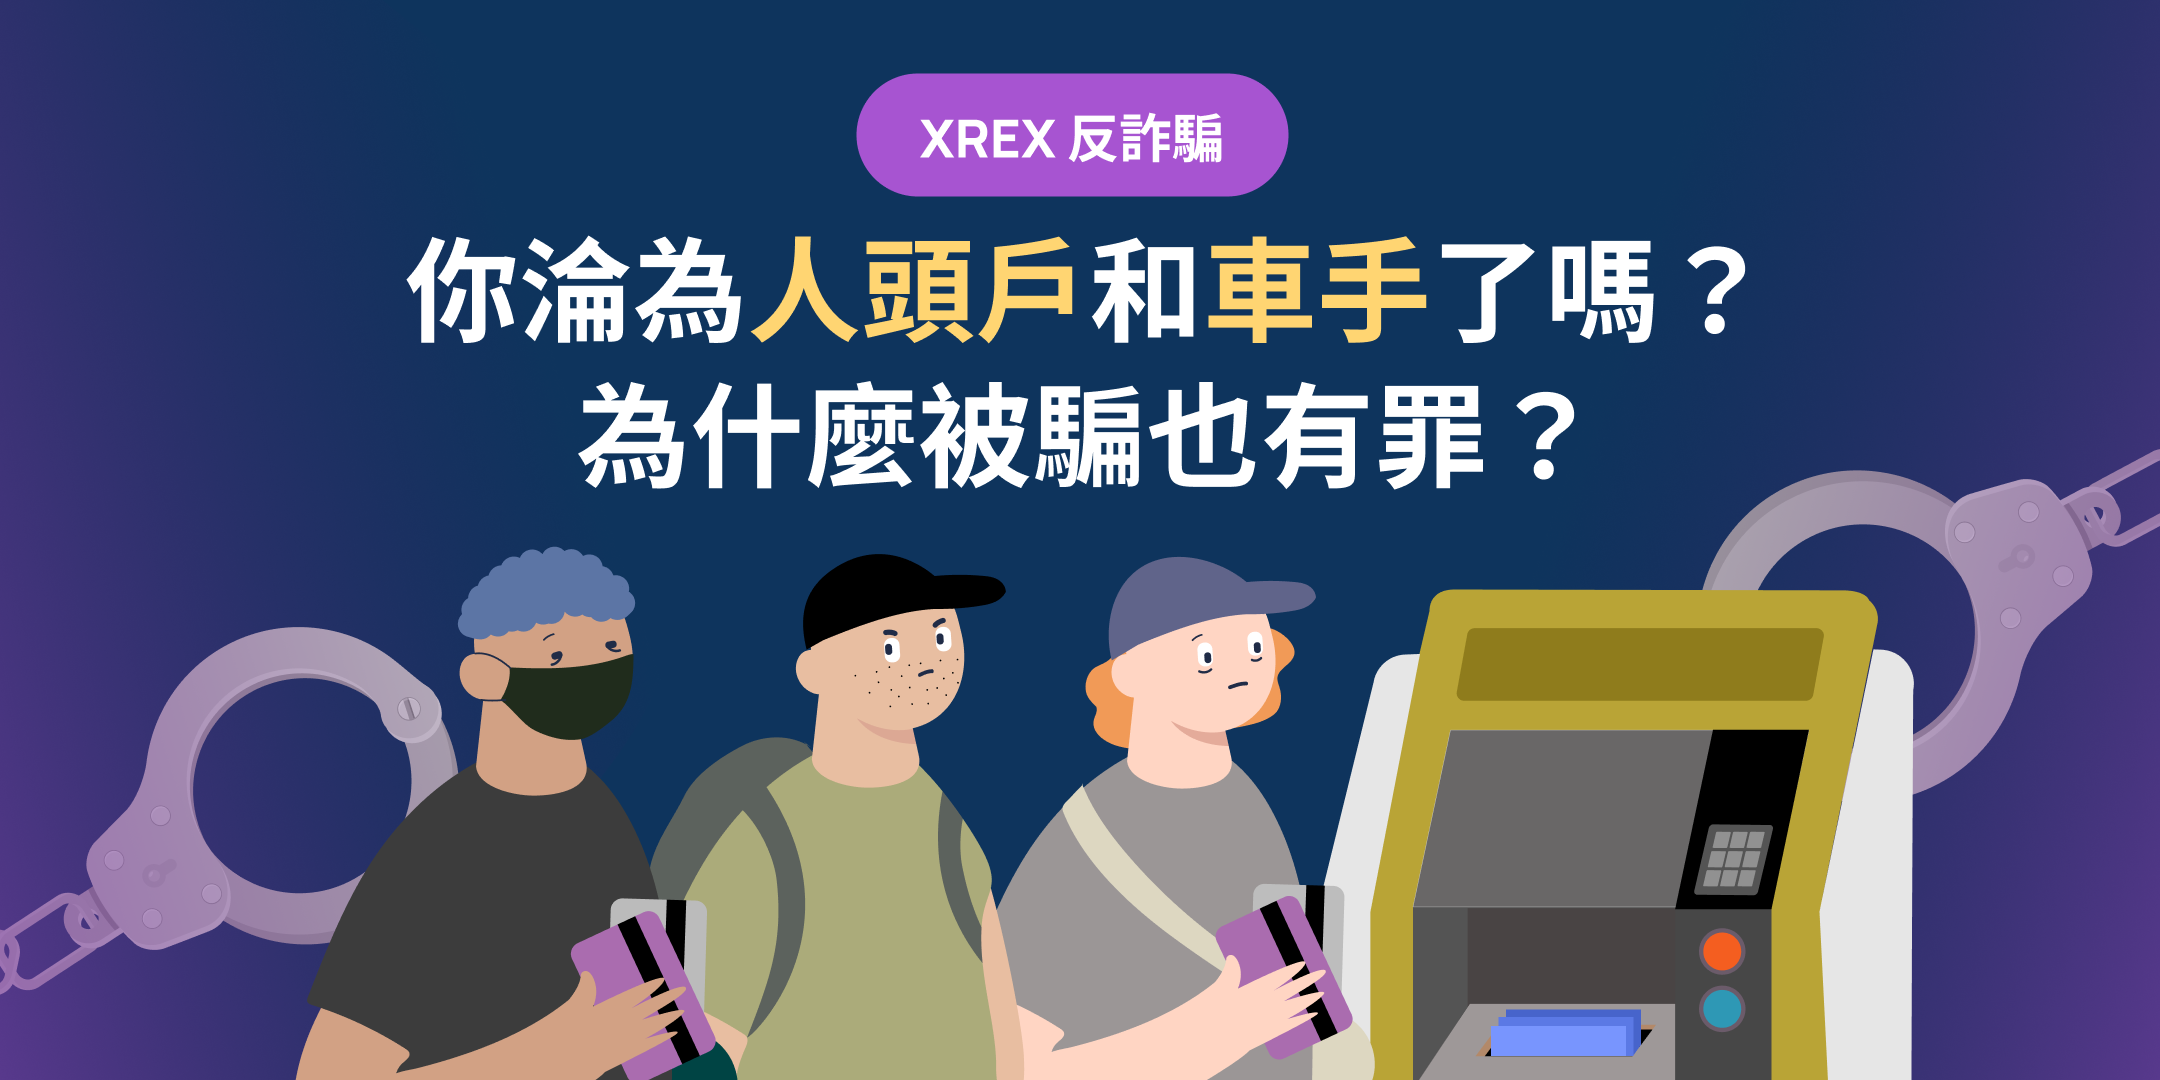 XREX 反詐騙：你淪為人頭戶和車手了嗎？為什麼被騙也有罪？